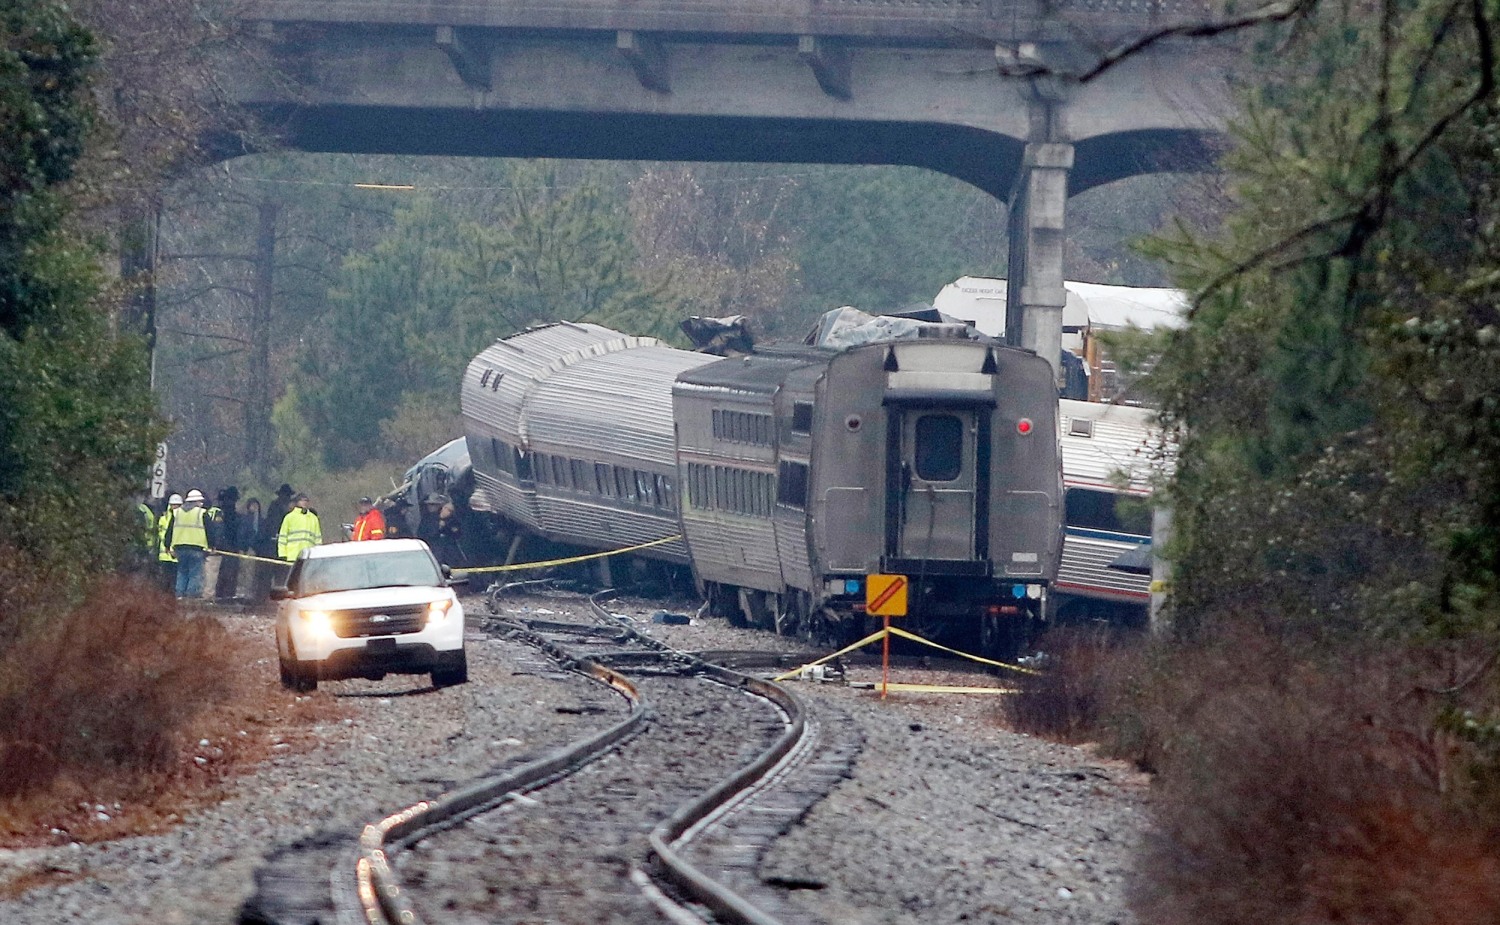 San Pablo Amtrak Crash Scatters Cars, Leaves Passengers Seeking Other  Transport Monday